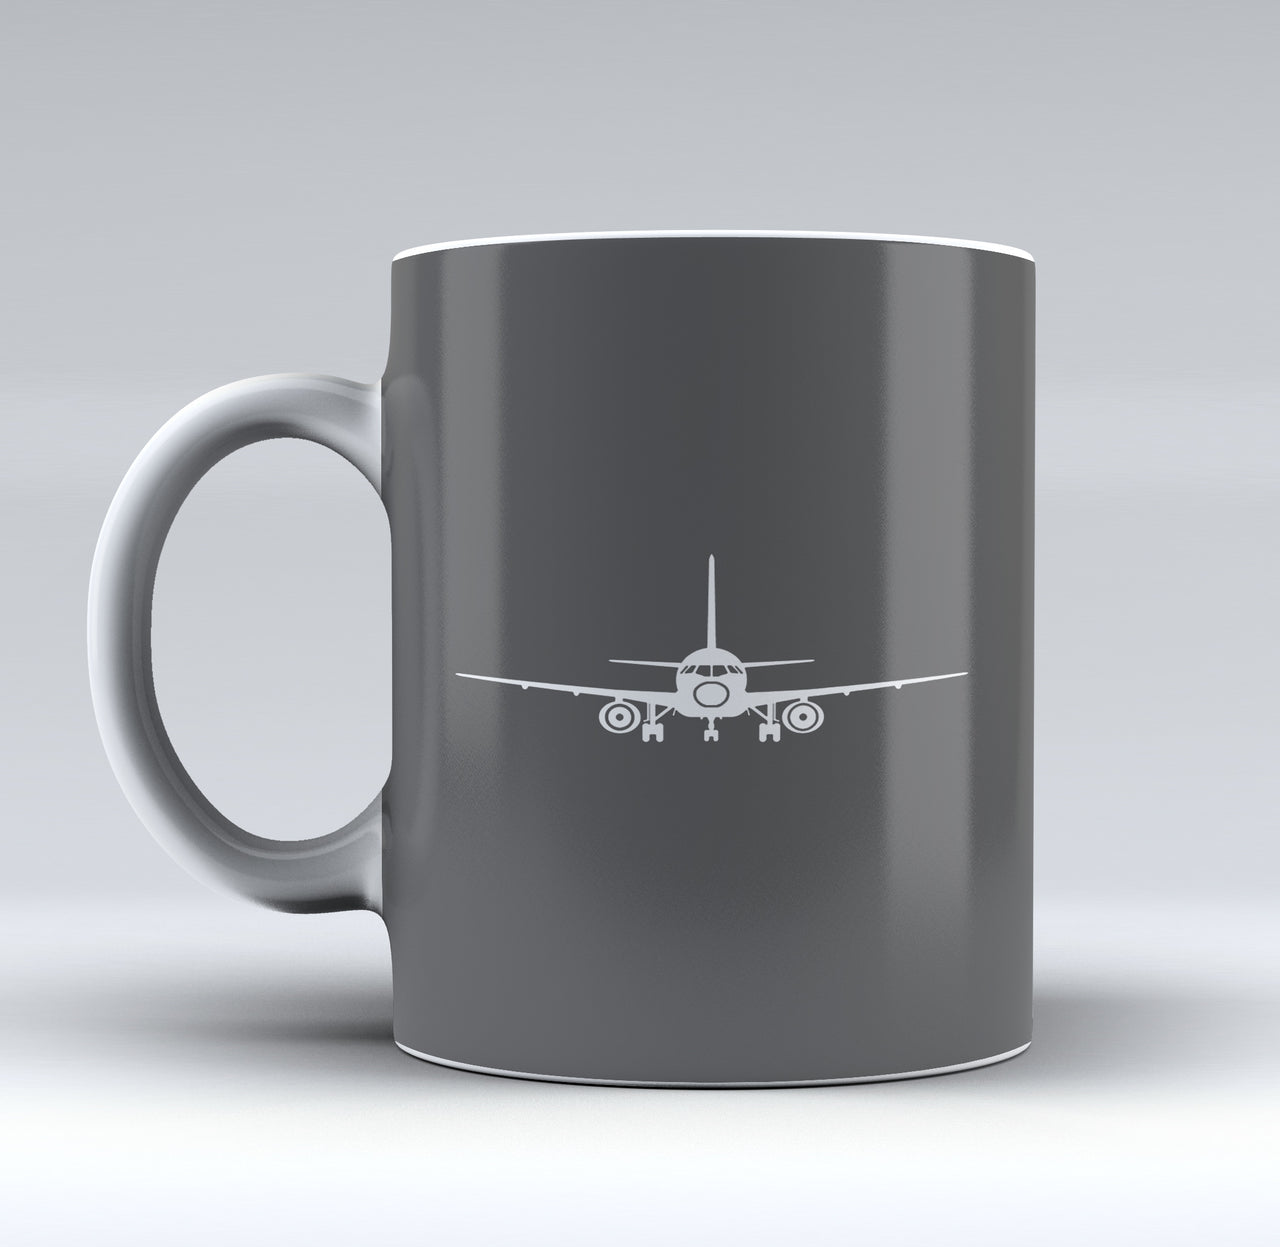 Sukhoi Superjet 100 Silhouette Designed Mugs